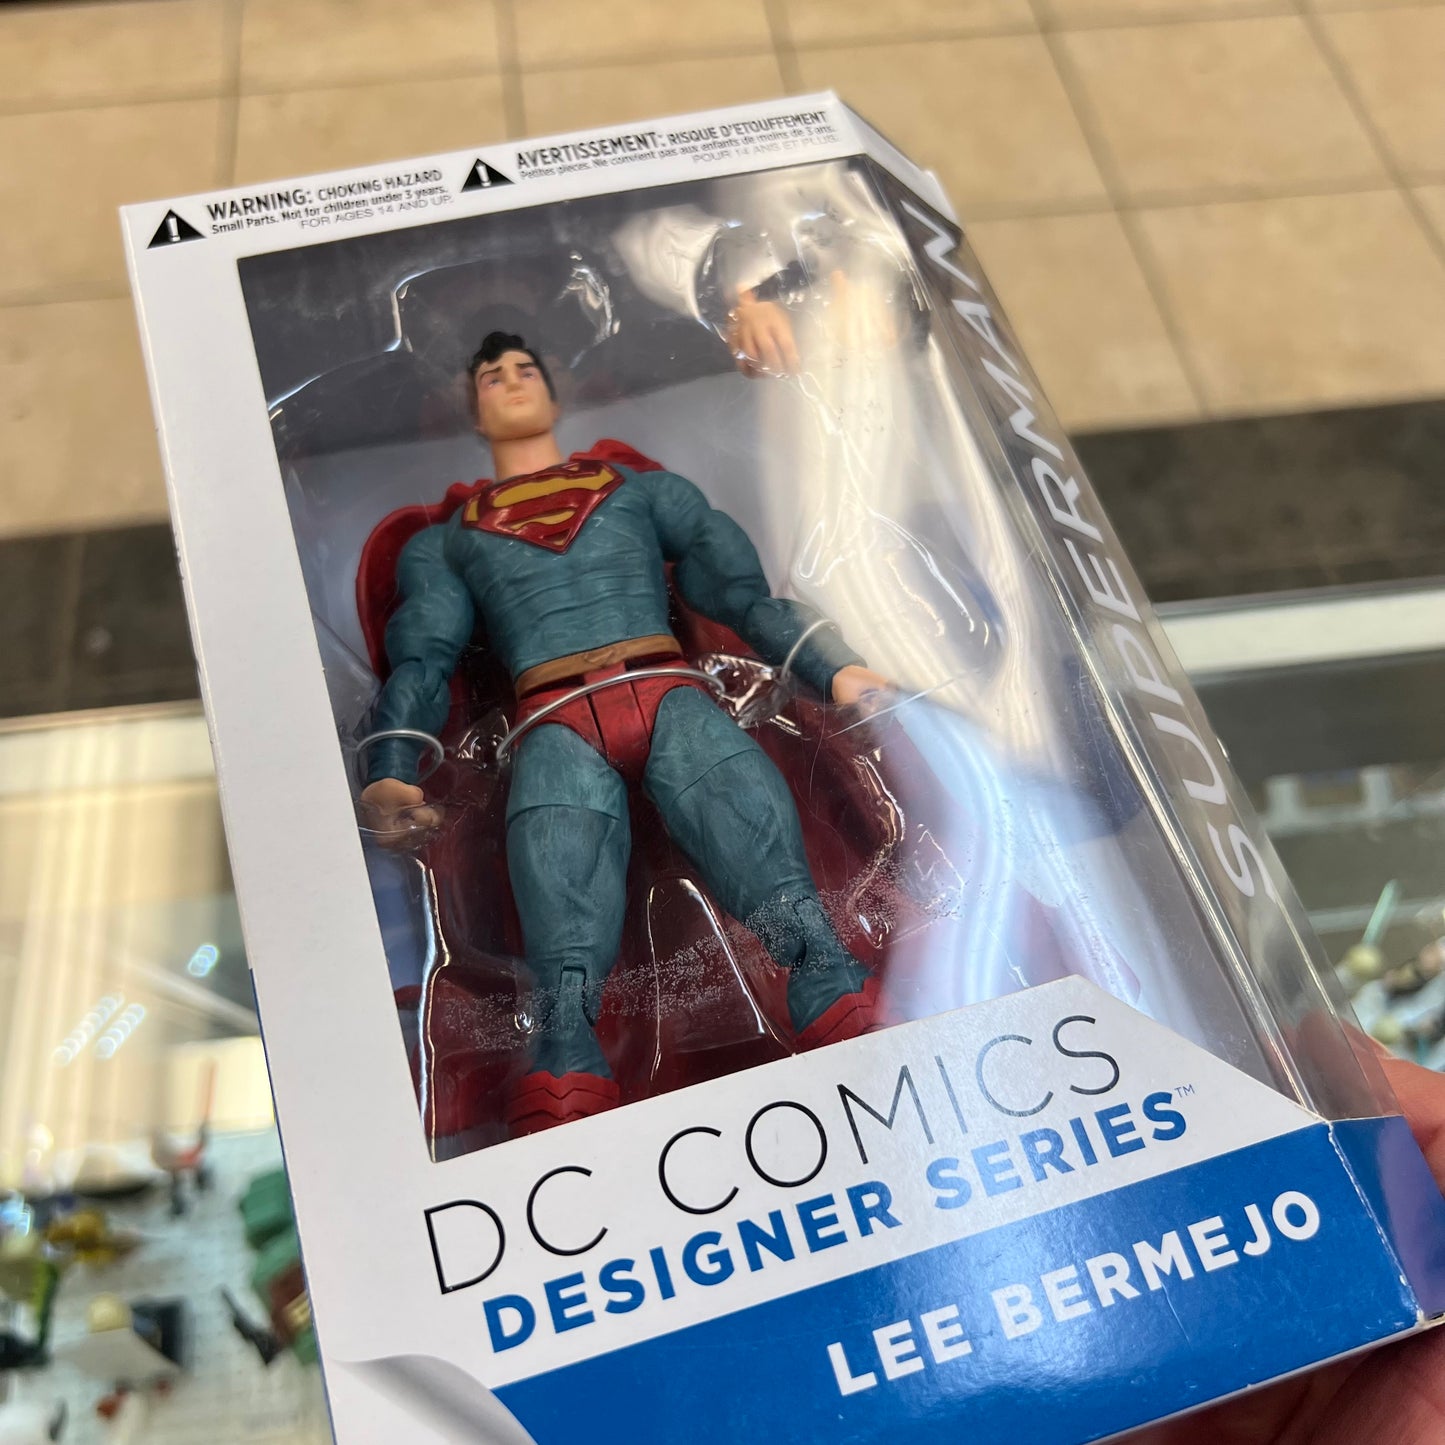 DC Comics - Designer Series (Lee Bermejo) - Superman (2016) - Action Figure